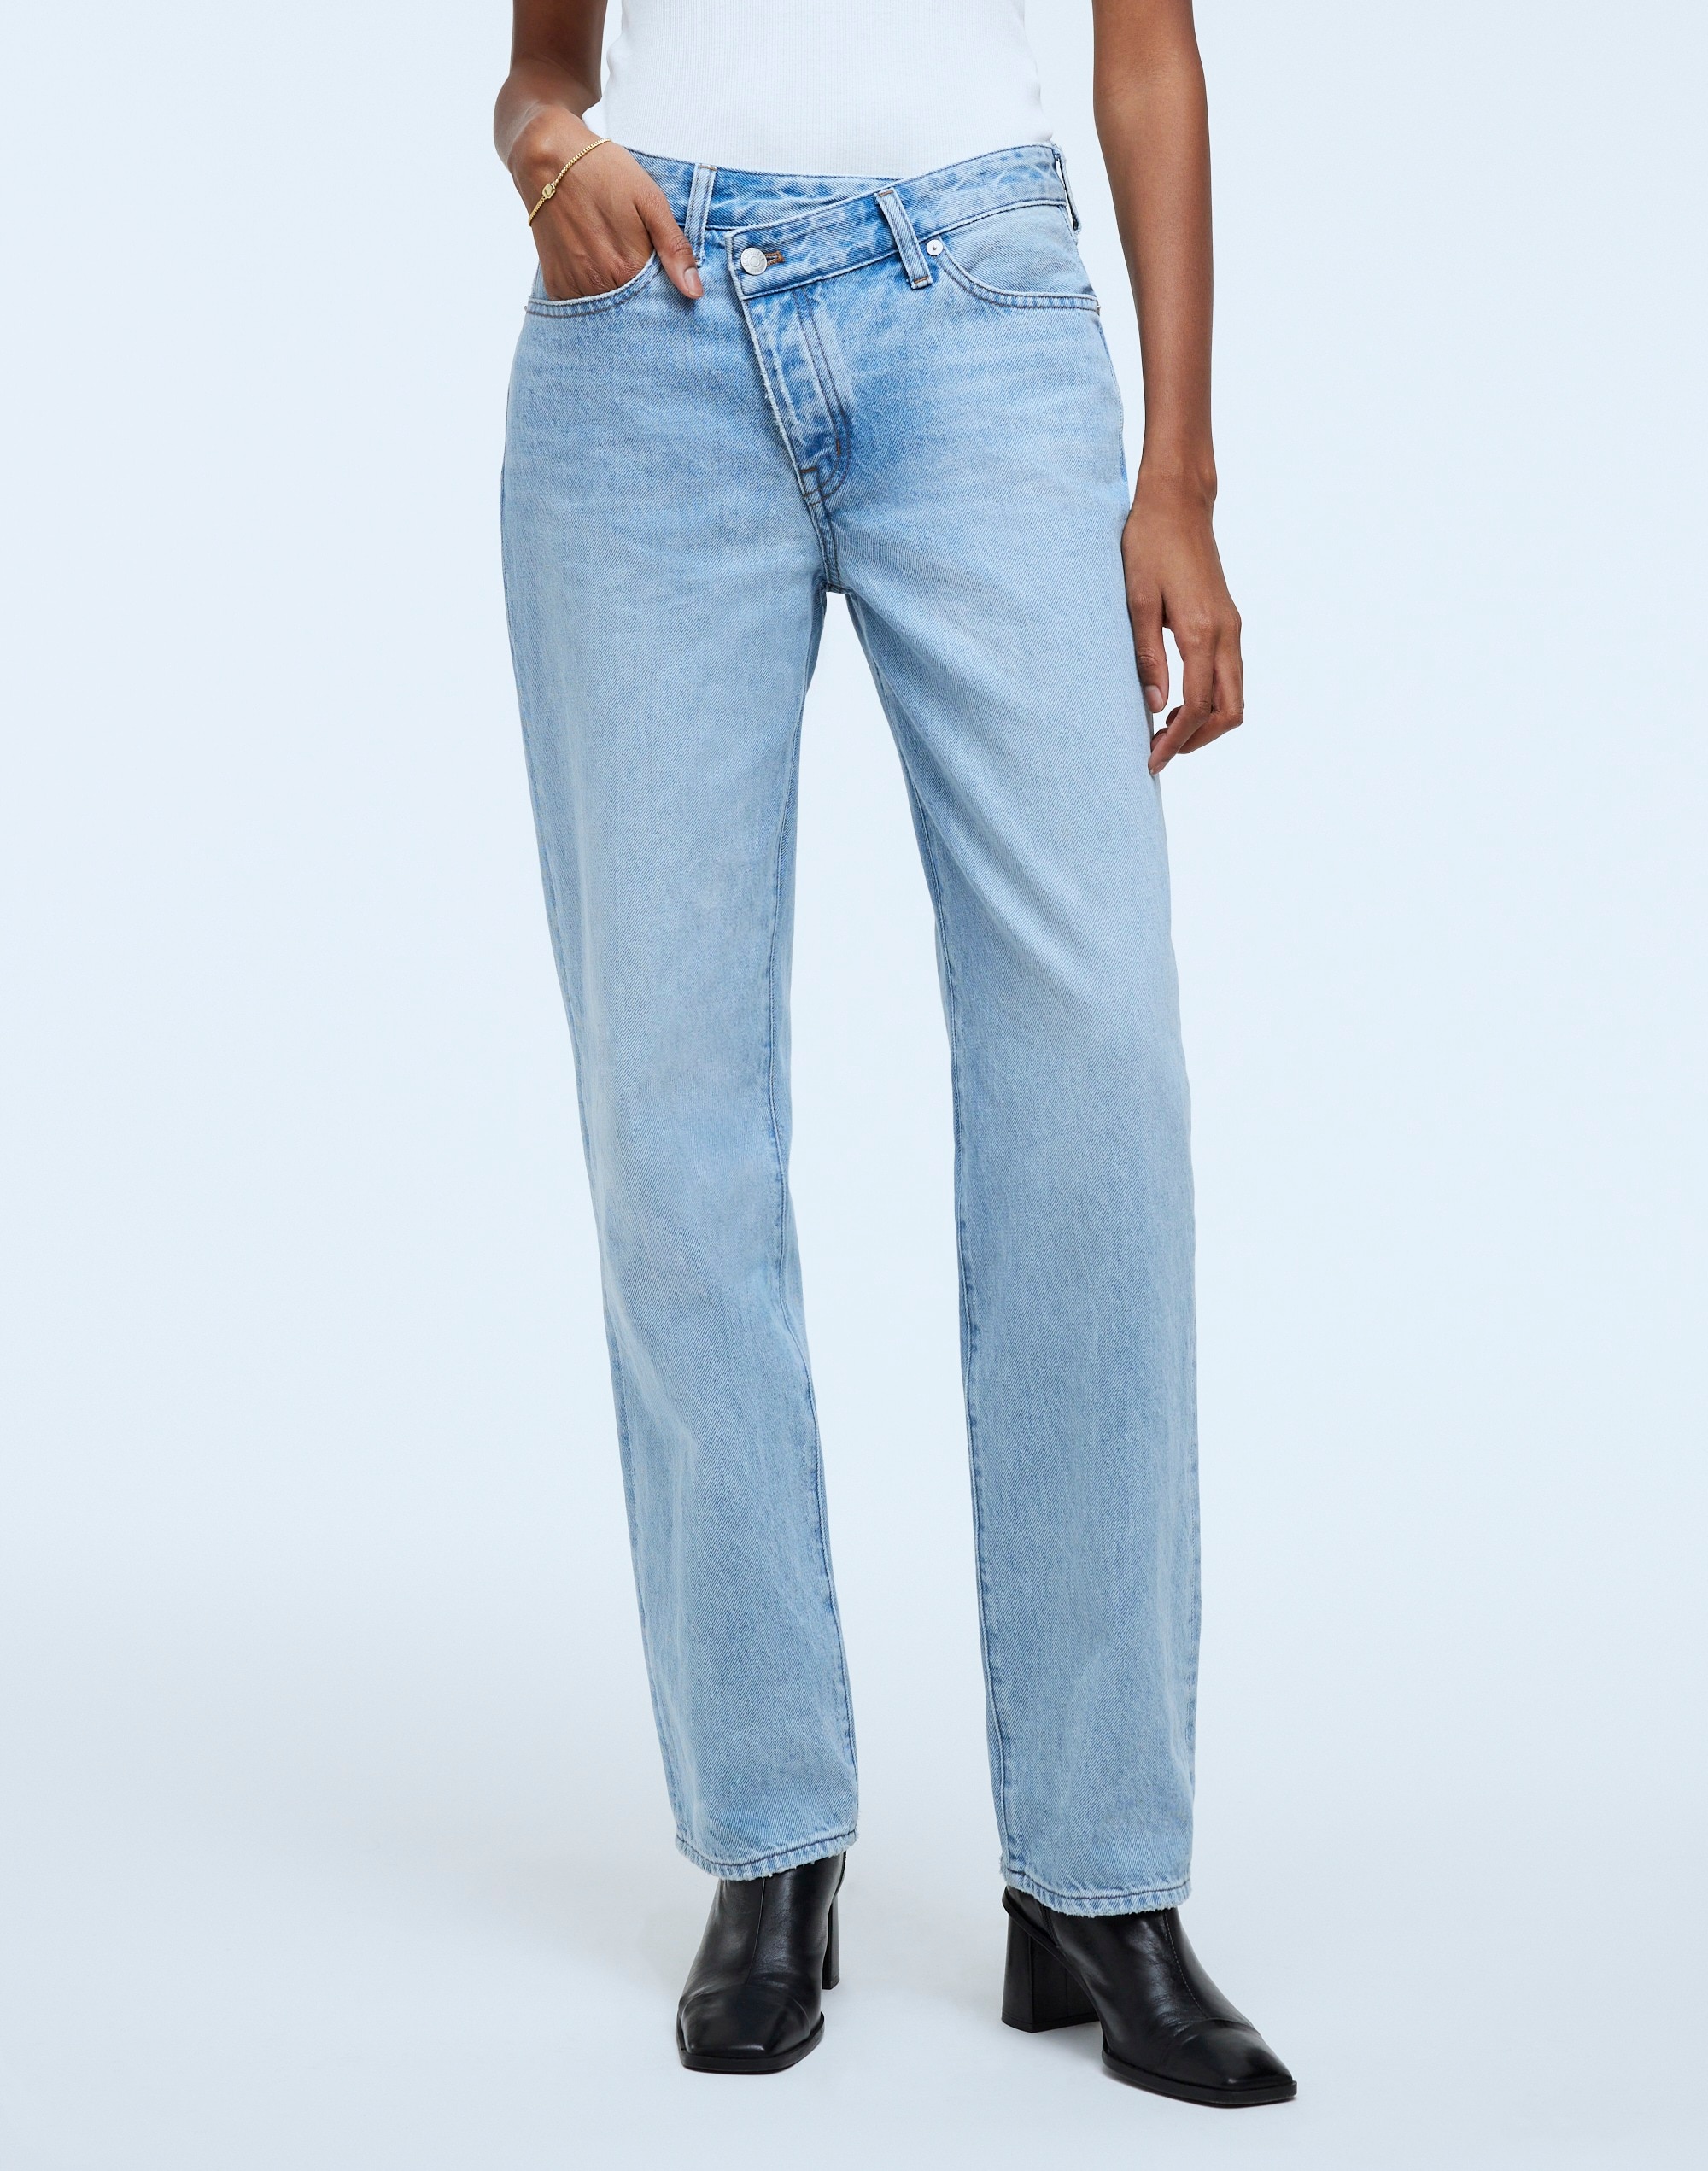 Low-Slung Straight Jeans Sevilla Wash: Cross-Tab Edition